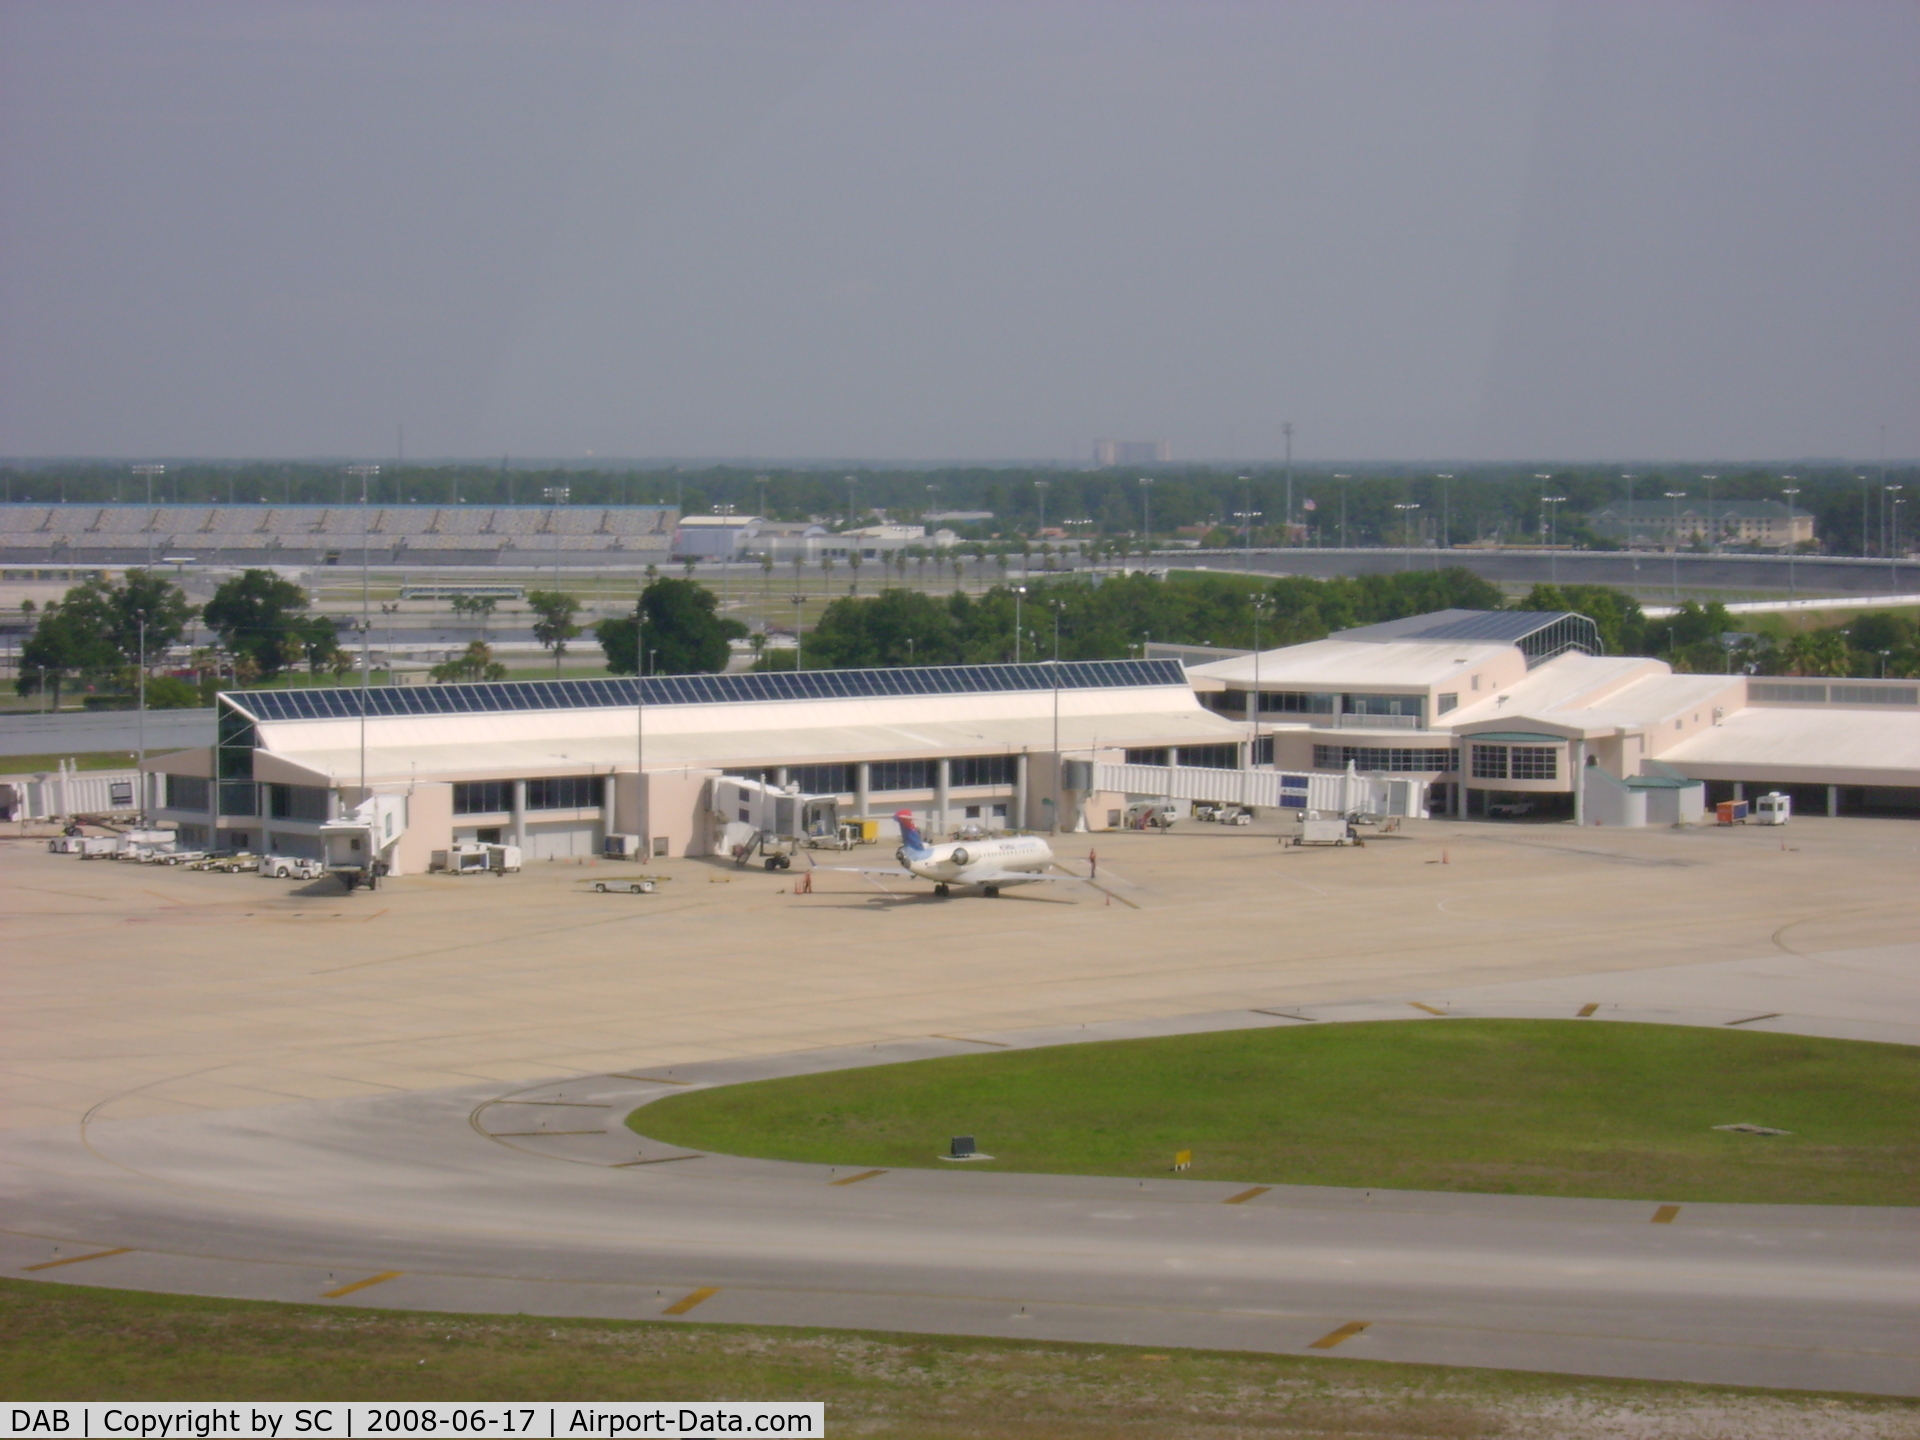 Daytona Beach International Airport (DAB) - Delta Connection from ATL